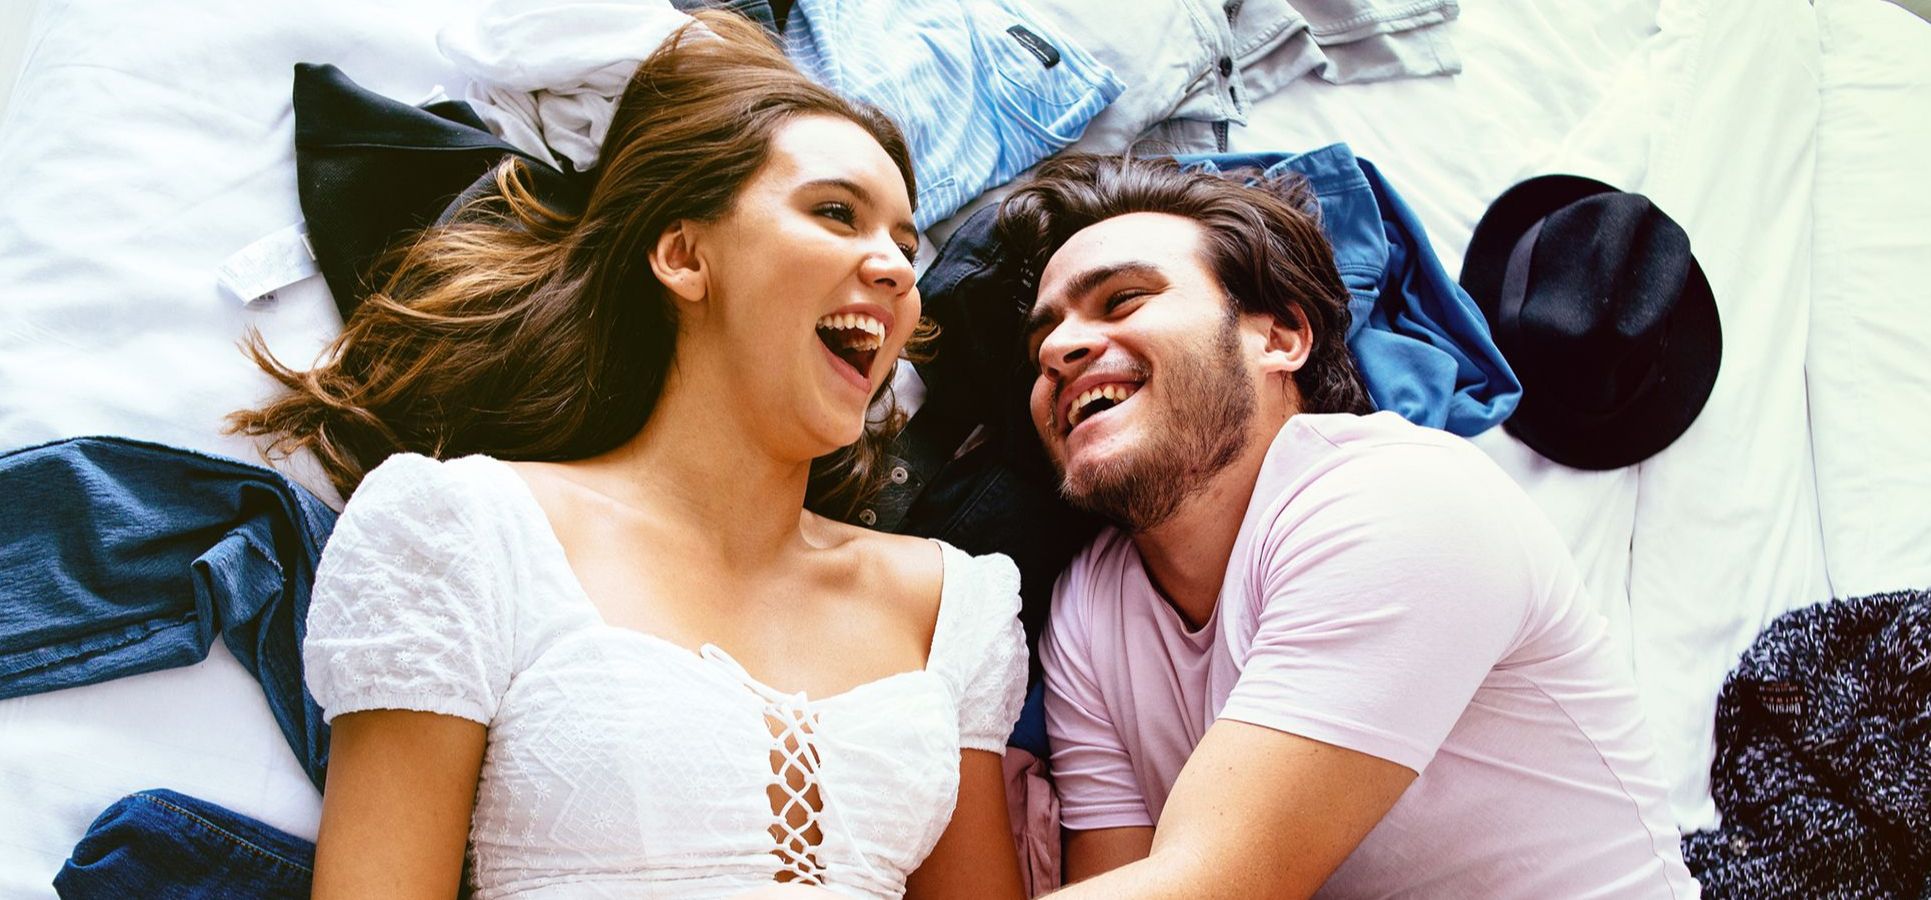 Mann umarmt Frau im Bett, beide lachen